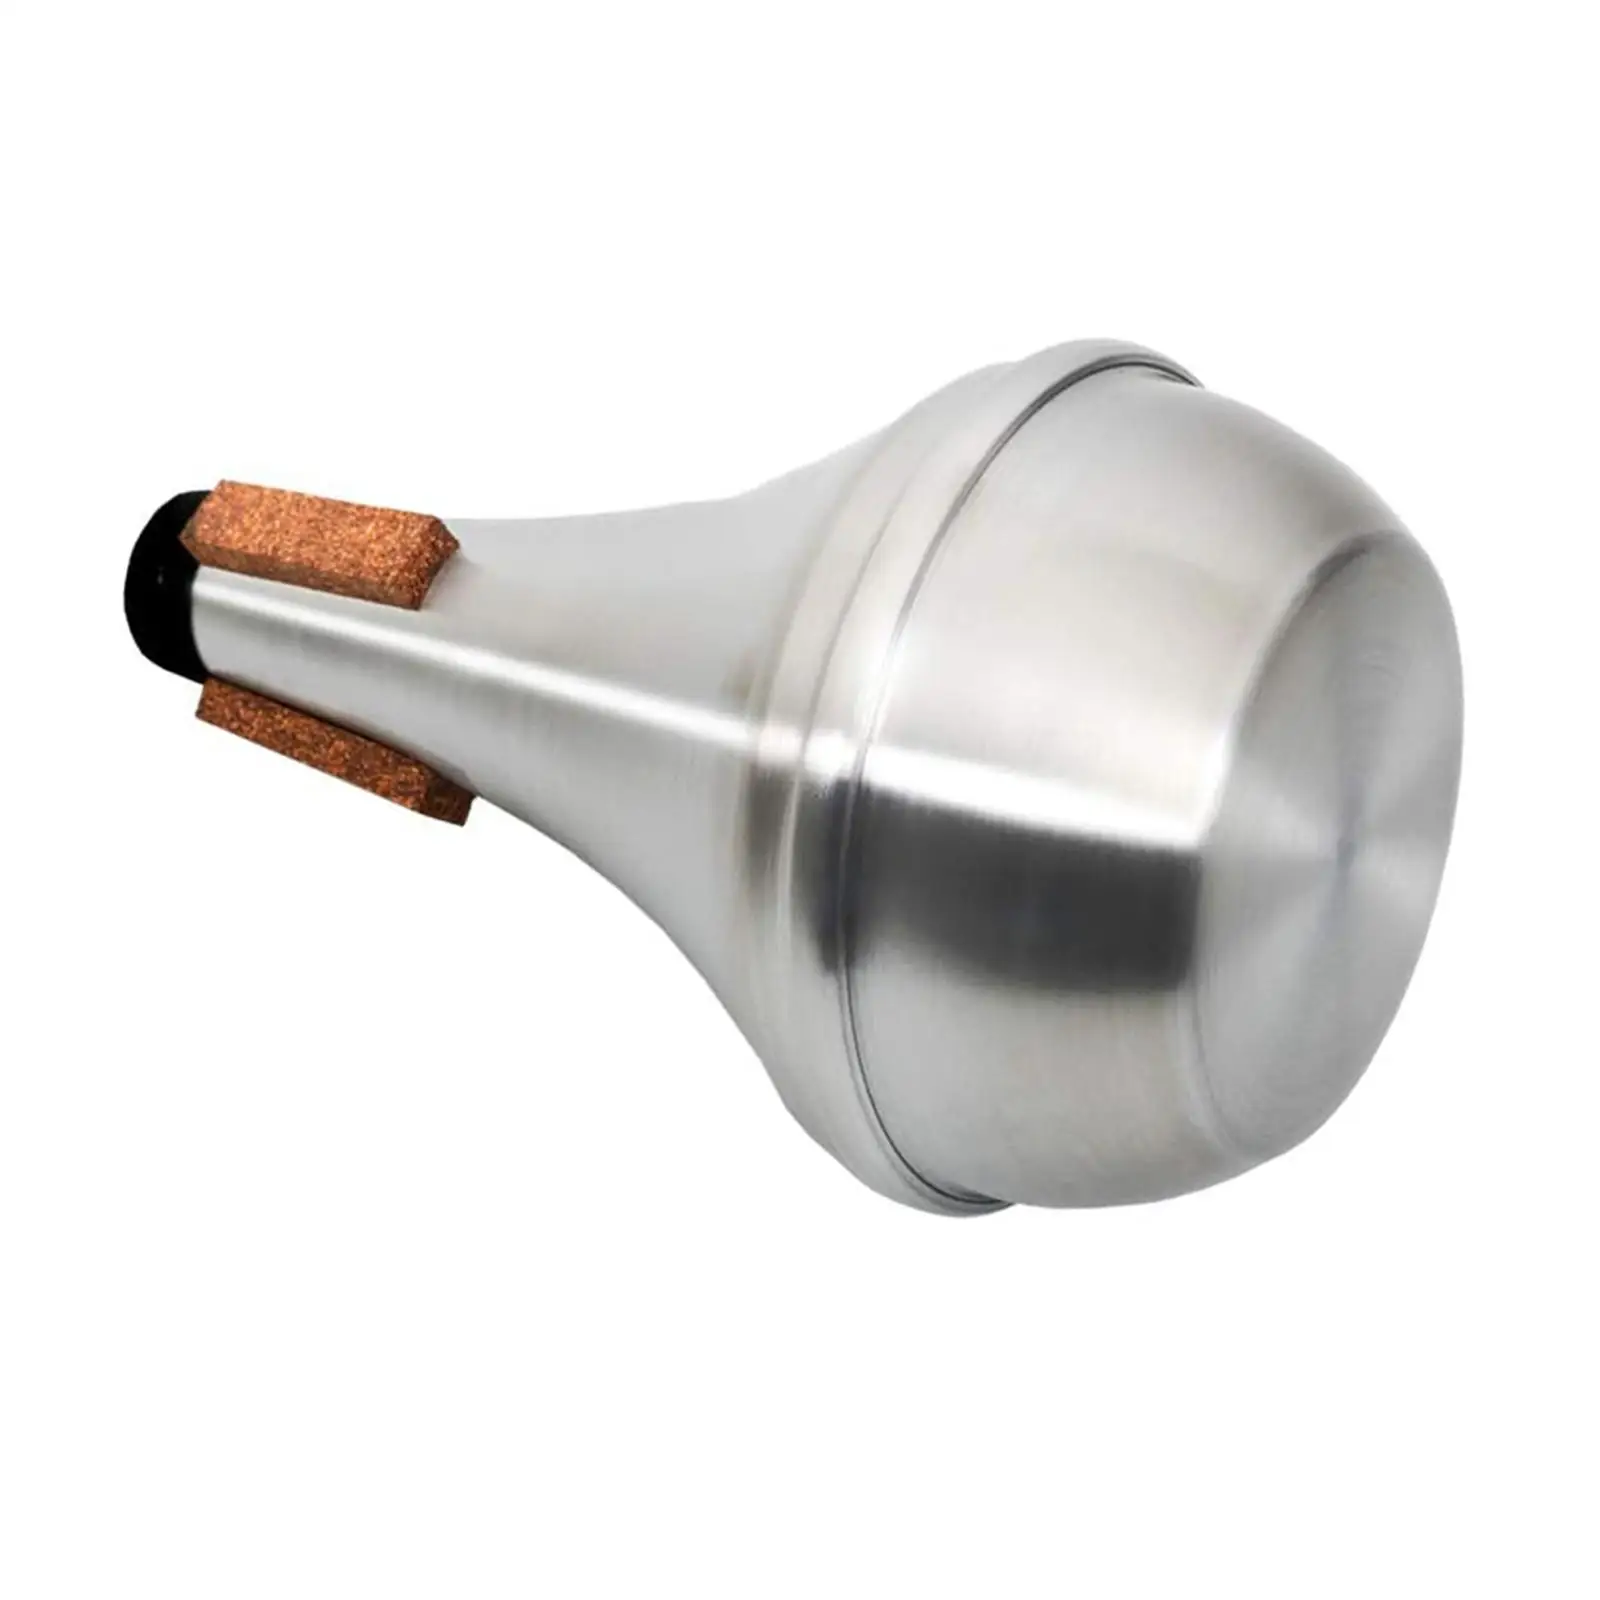 Aluminum Practice Trumpet Mute, Professional Trumpet Straight Mute, Simple Installation for Musical Instrument